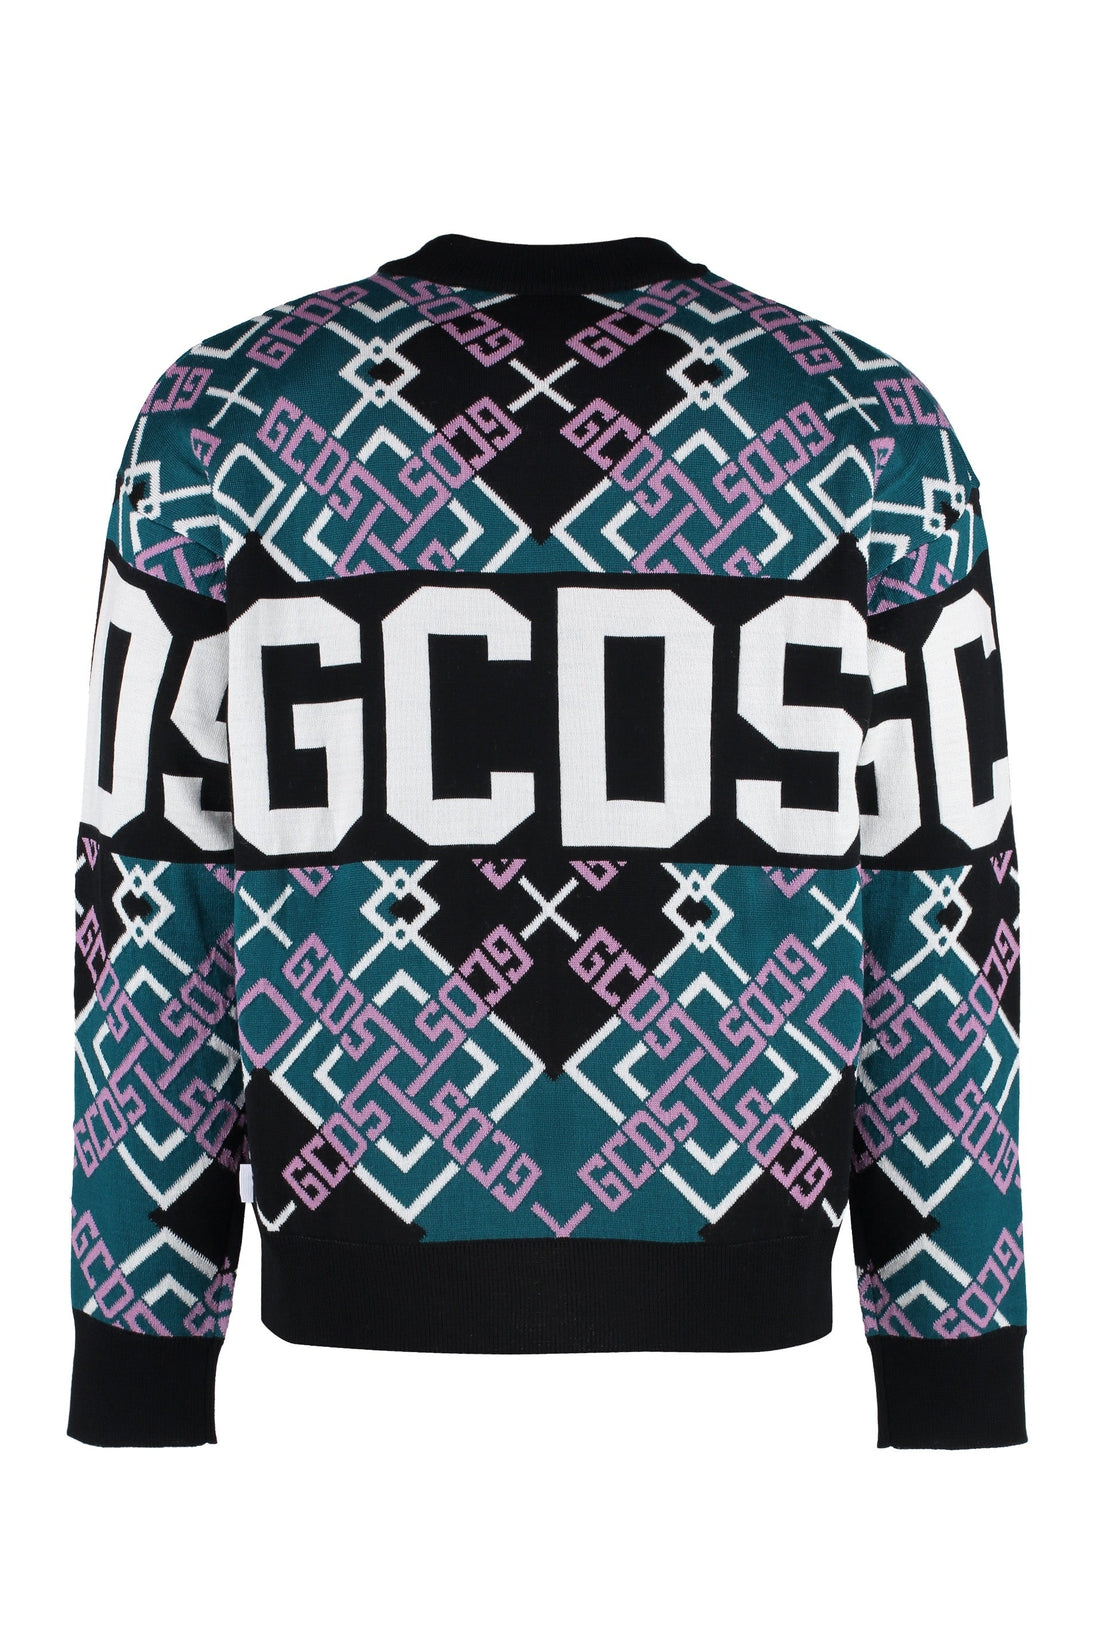 GCDS-OUTLET-SALE-Long sleeve crew-neck sweater-ARCHIVIST